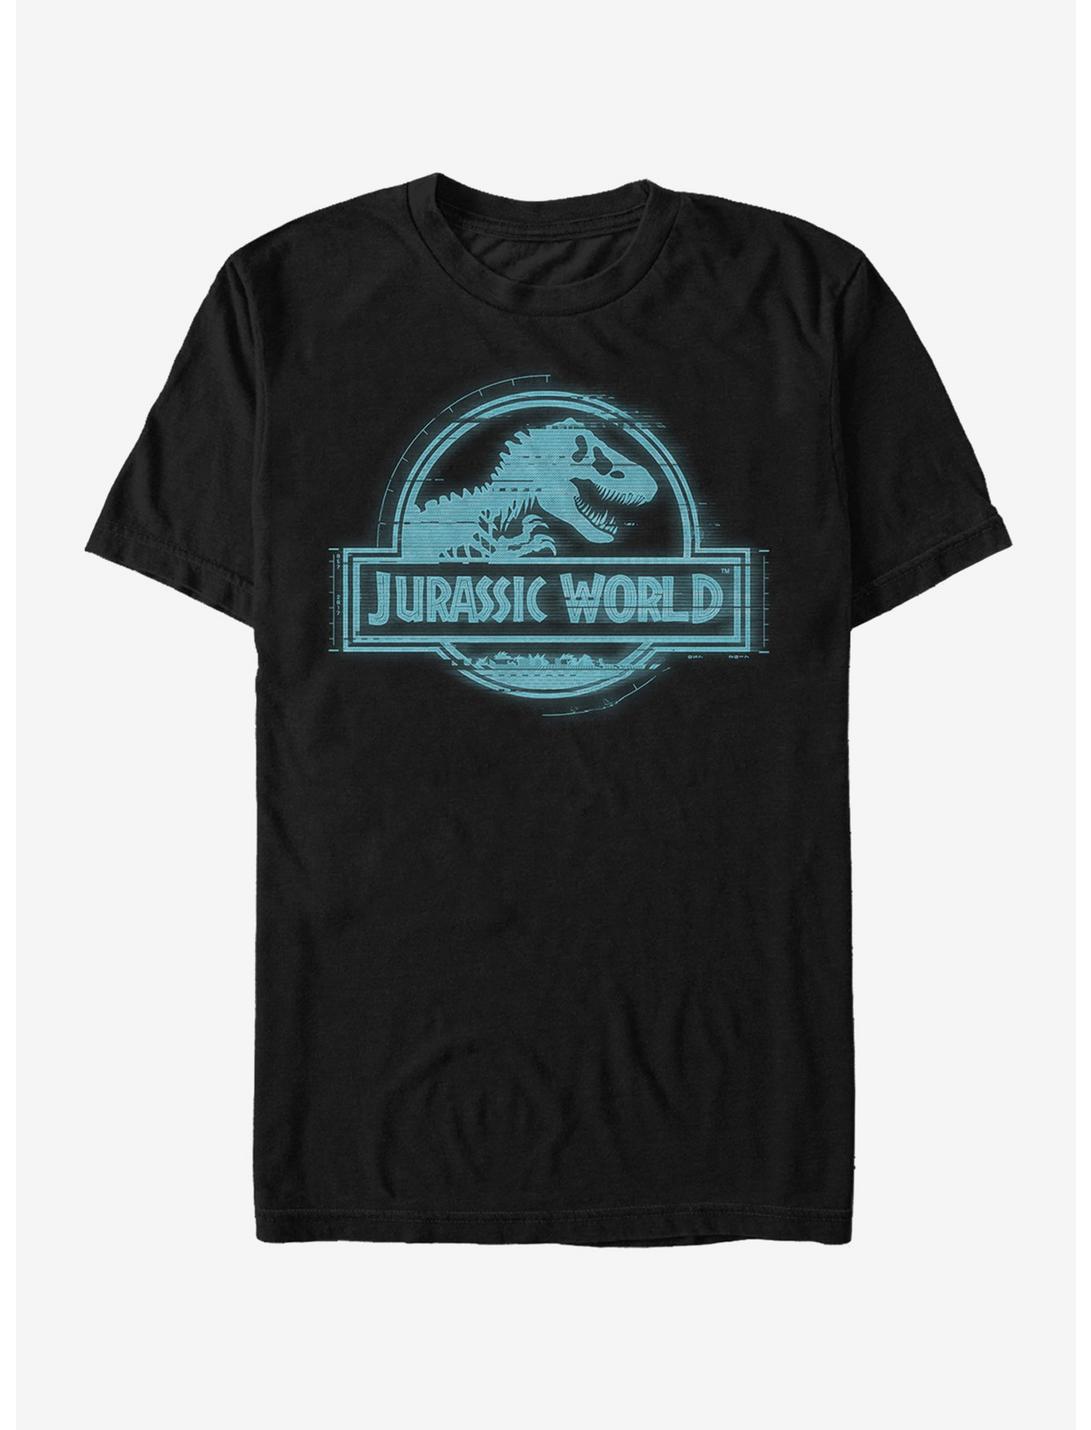 Jurassic World Glitch Logo T-Shirt, BLACK, hi-res